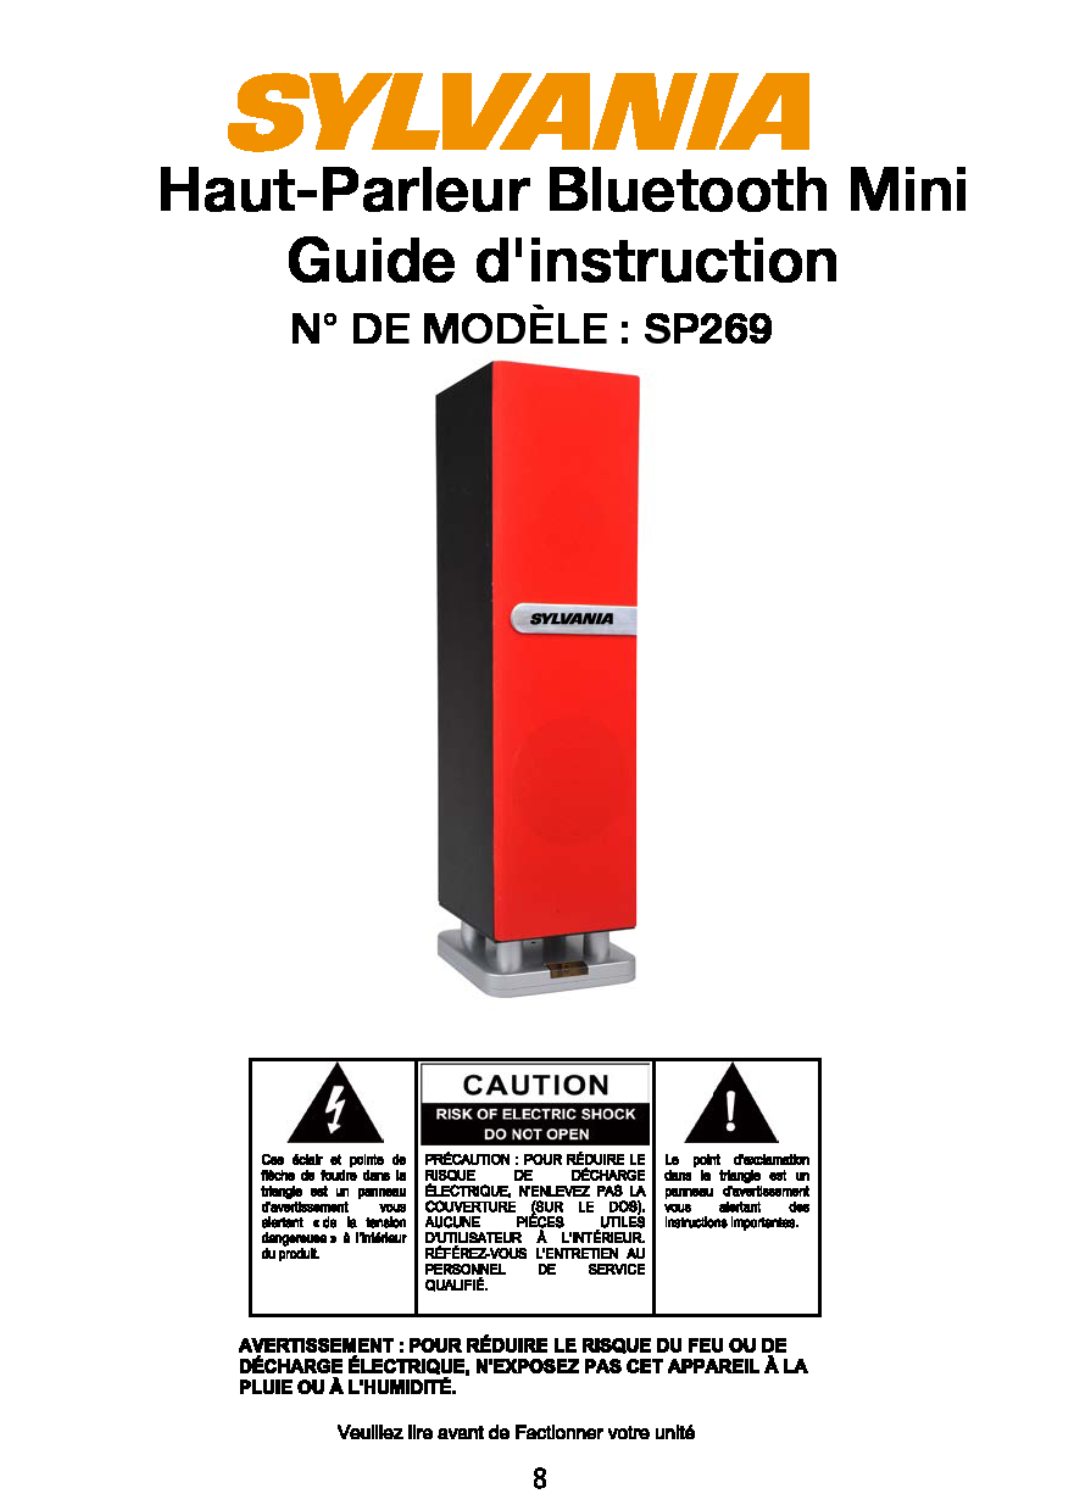 Sylvania manual Haut-ParleurBluetooth Mini Guide dinstruction, N DE MODÈLE SP269 